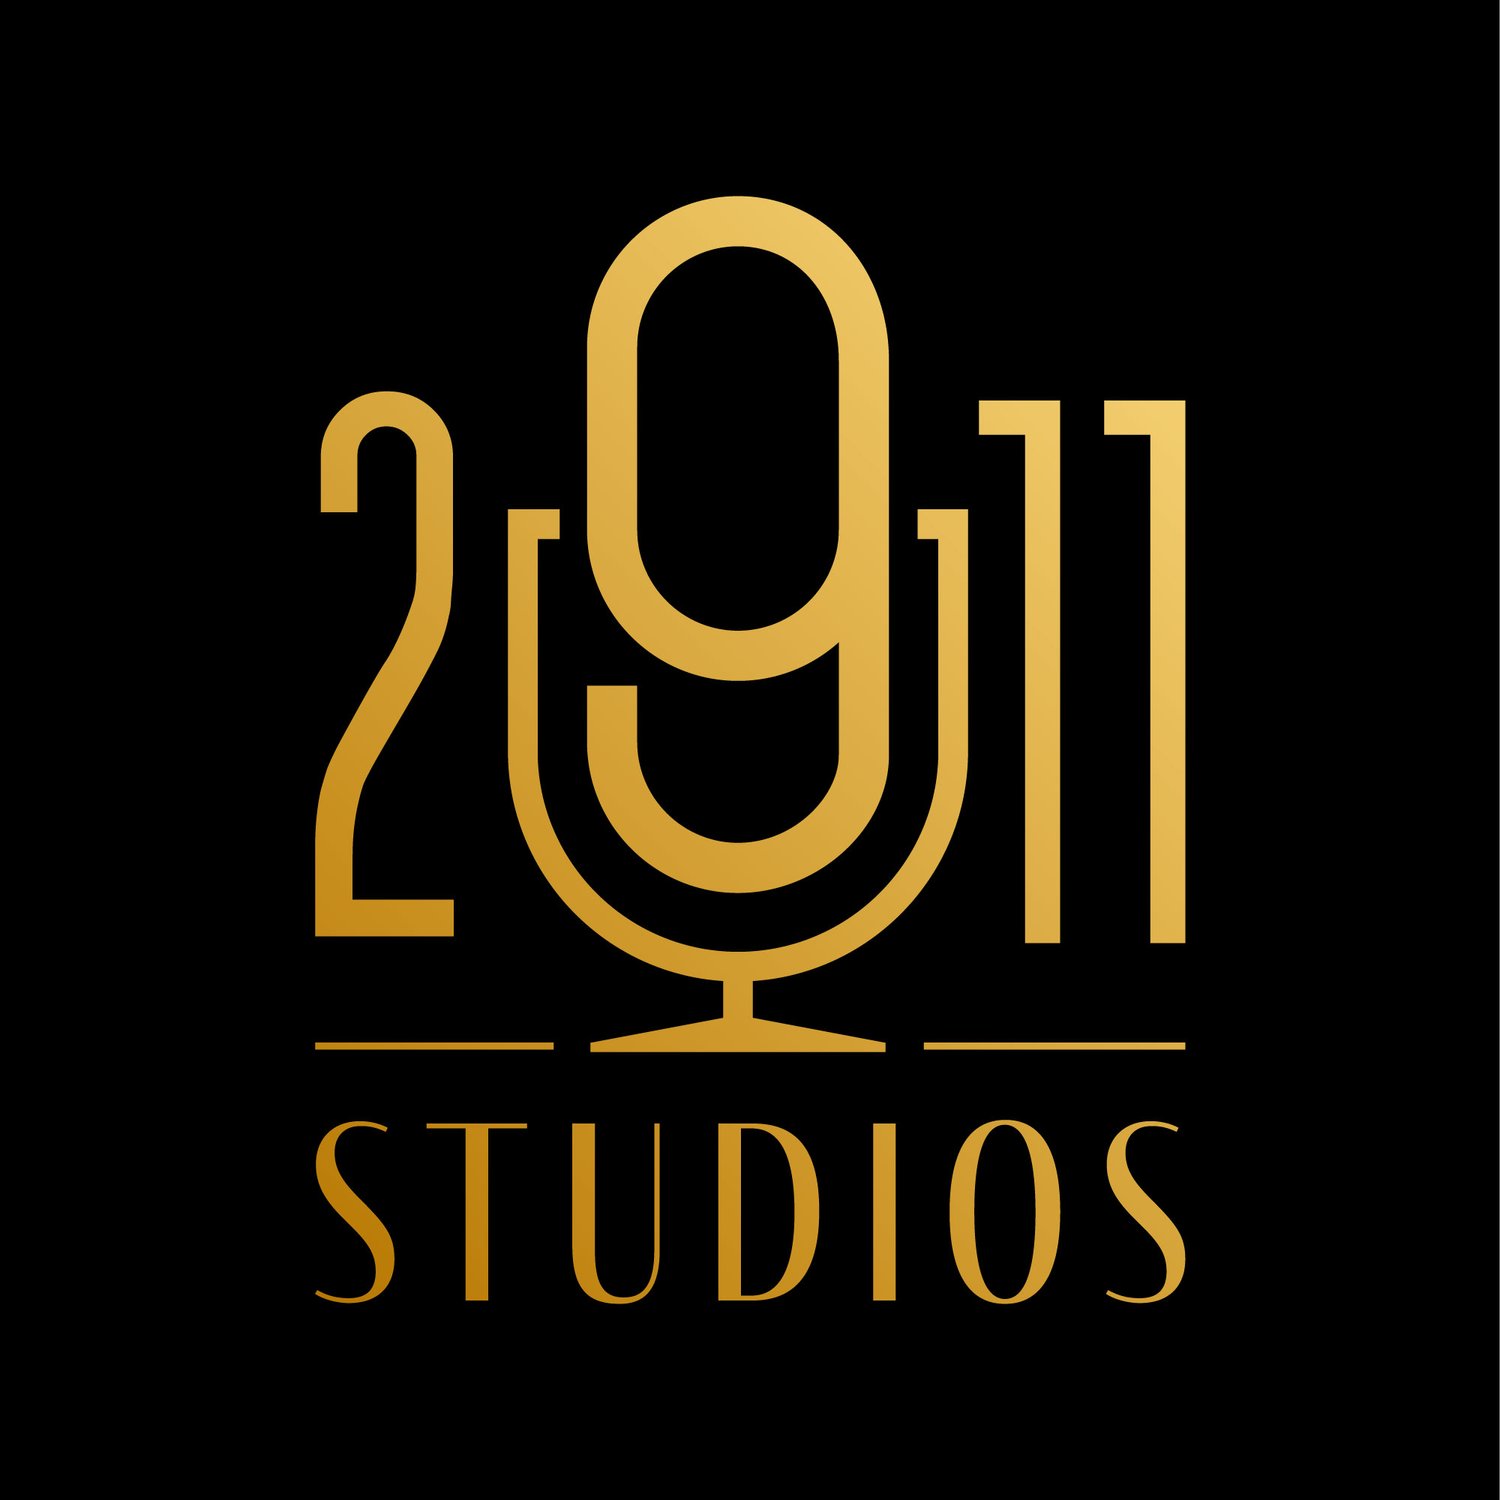 2911 Studios